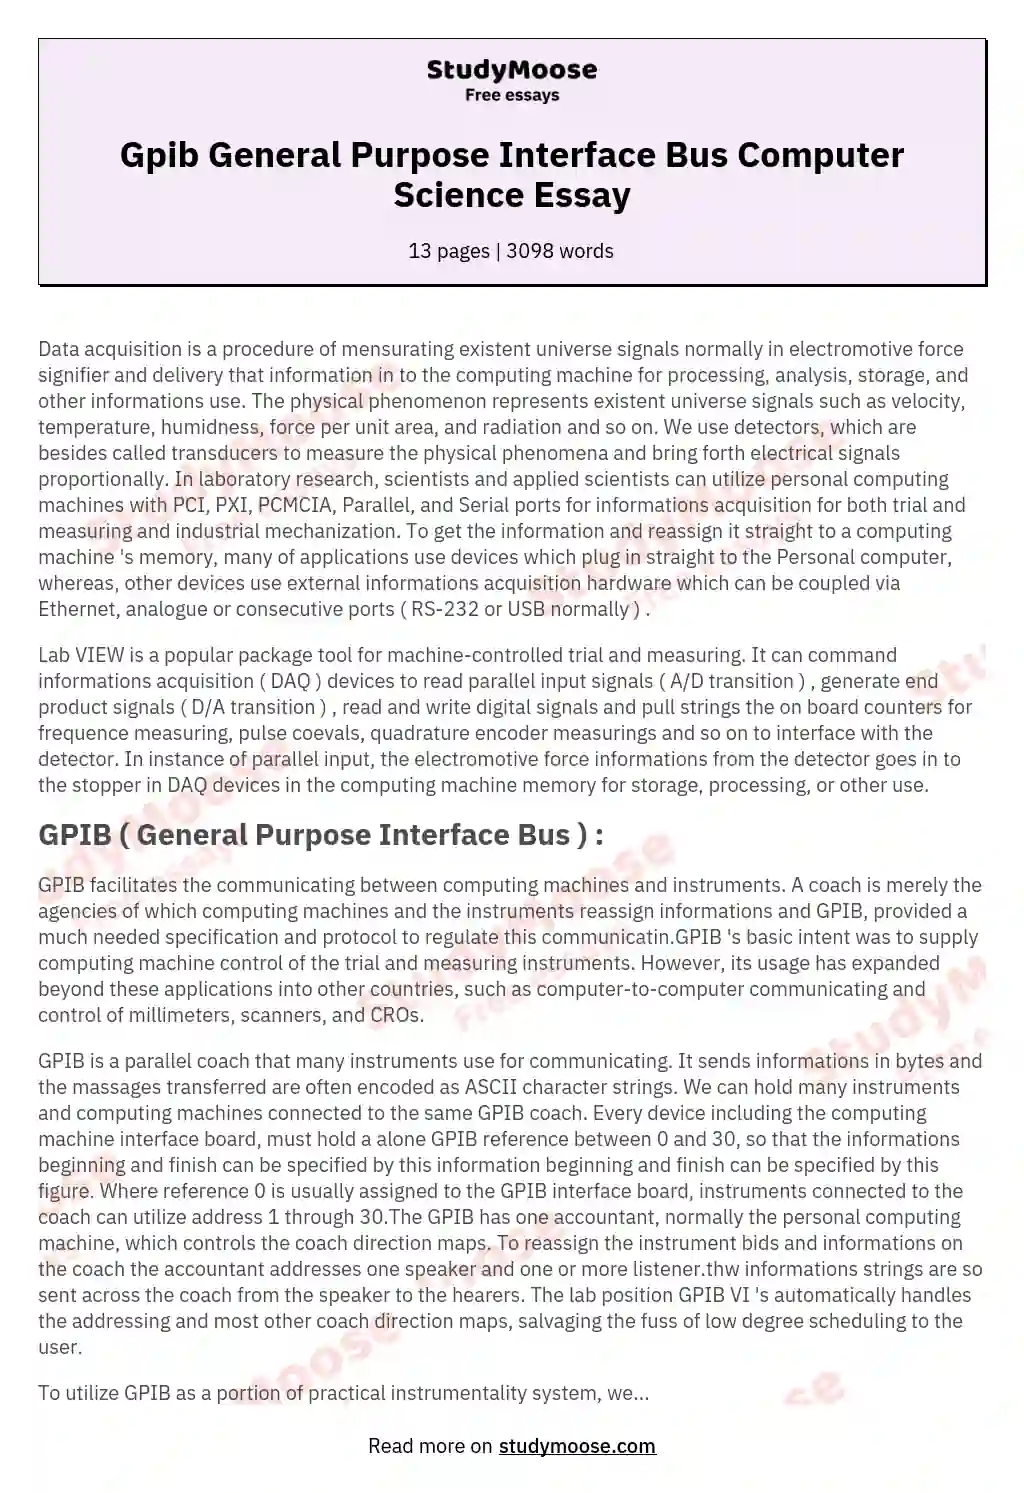 Gpib General Purpose Interface Bus Computer Science Essay essay